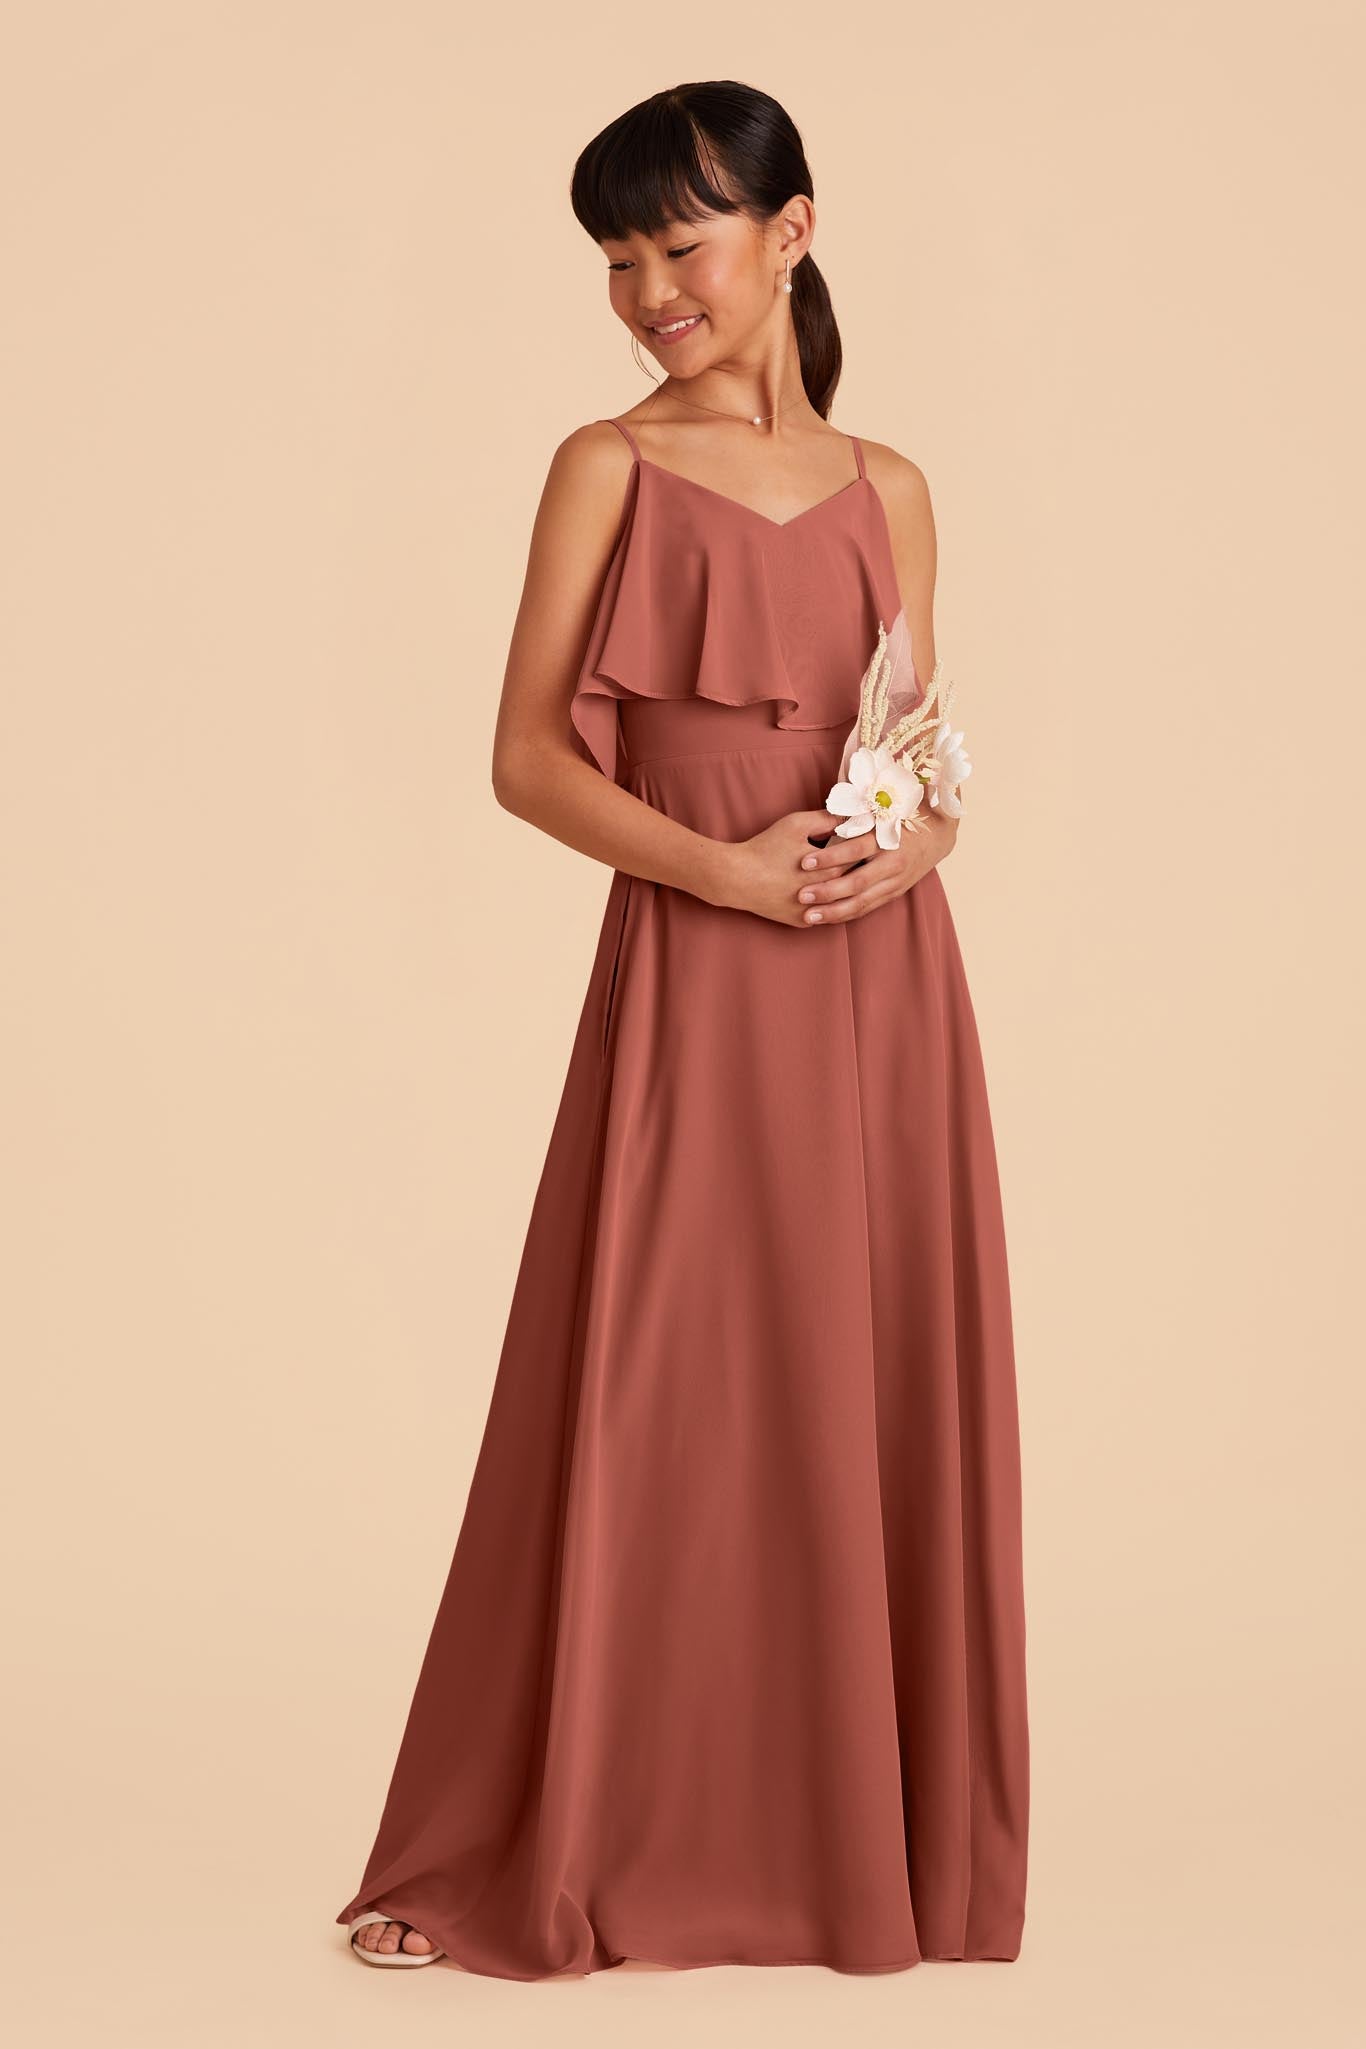 Desert Rose Janie Convertible Junior Dress by Birdy Grey